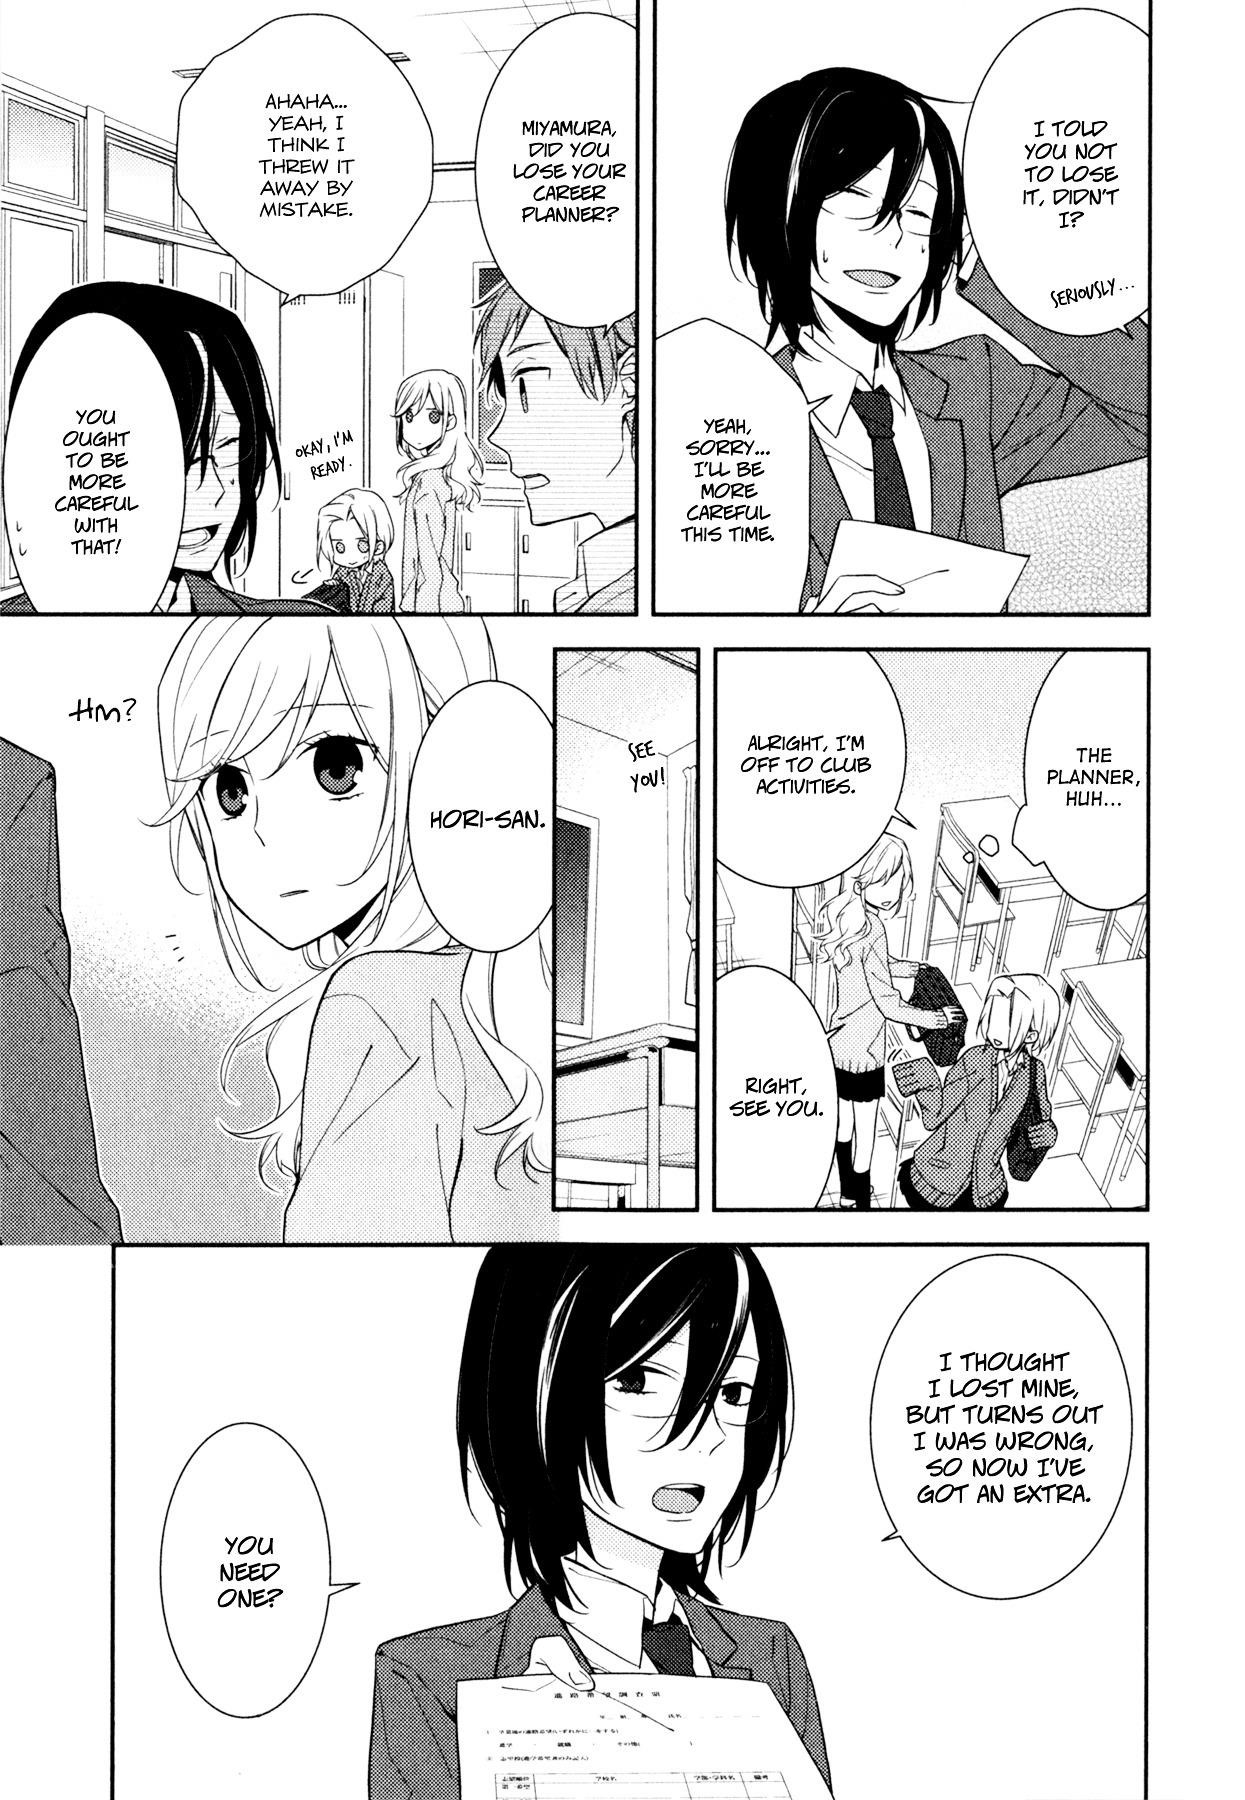 Read Manga HORIMIYA - Chapter 8